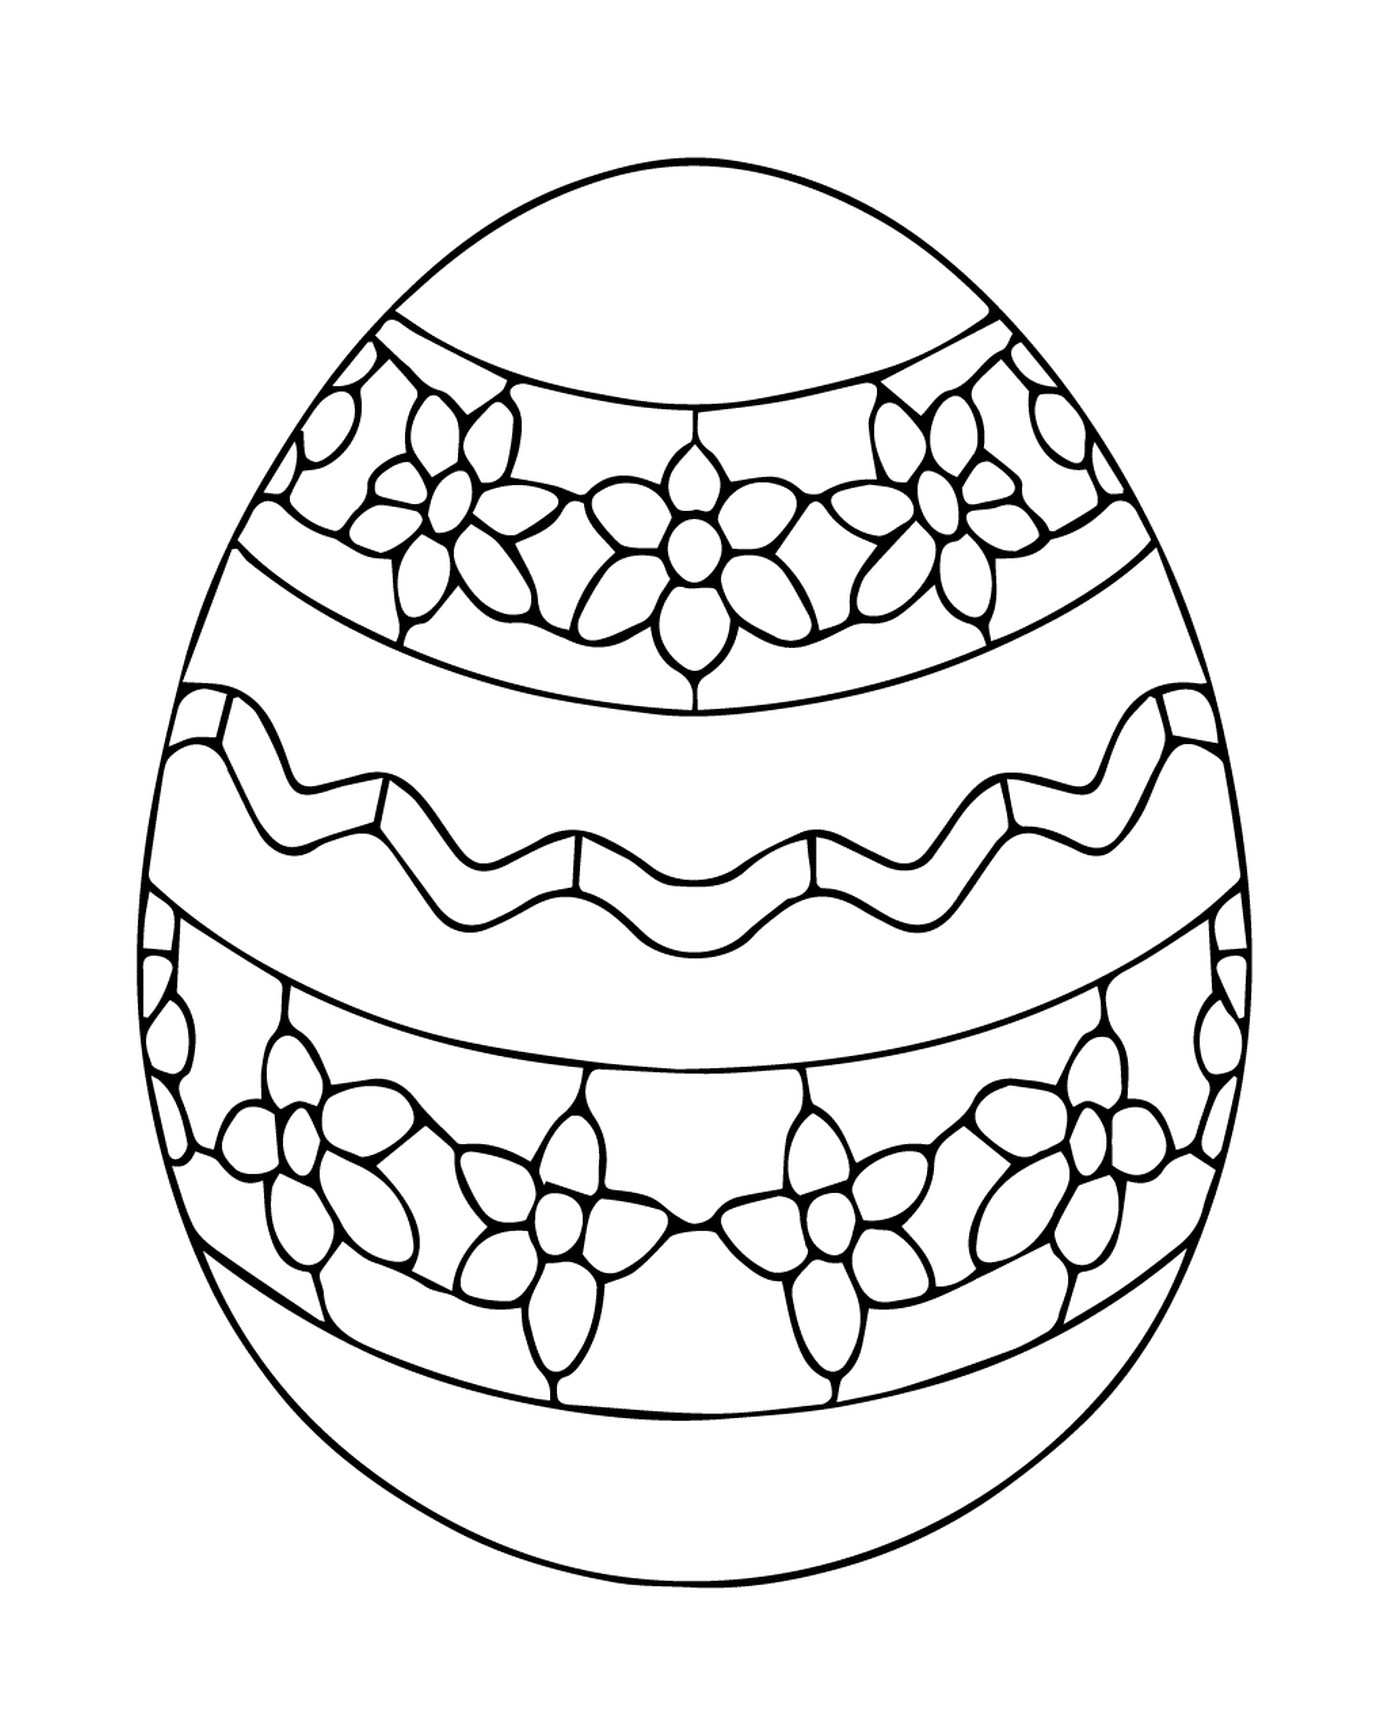  Ukrainian Easter egg with floral pattern 